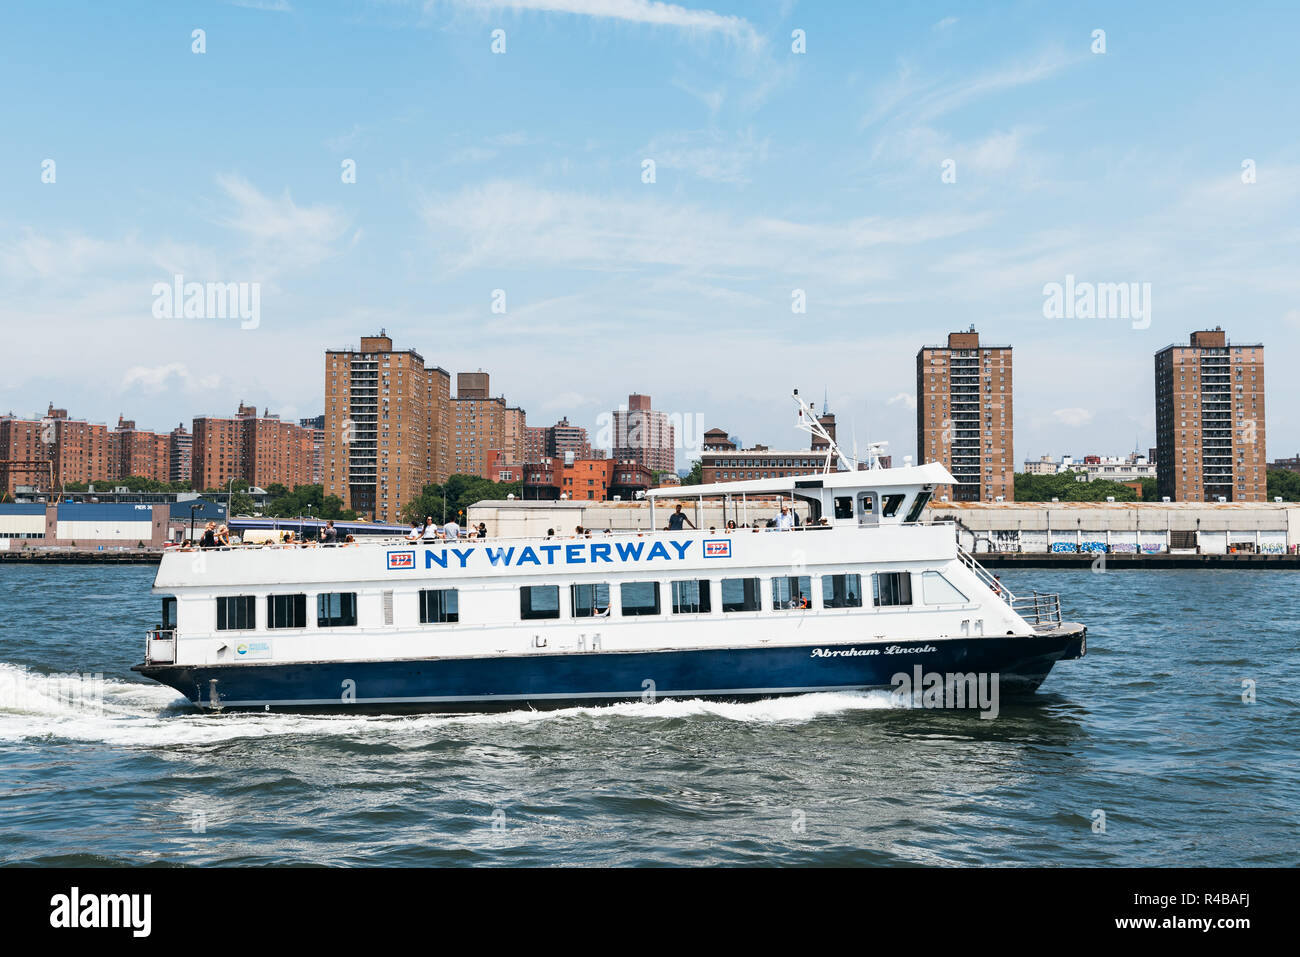 new york city, usa - june 24, 2018: ny waterway ferry navigating the